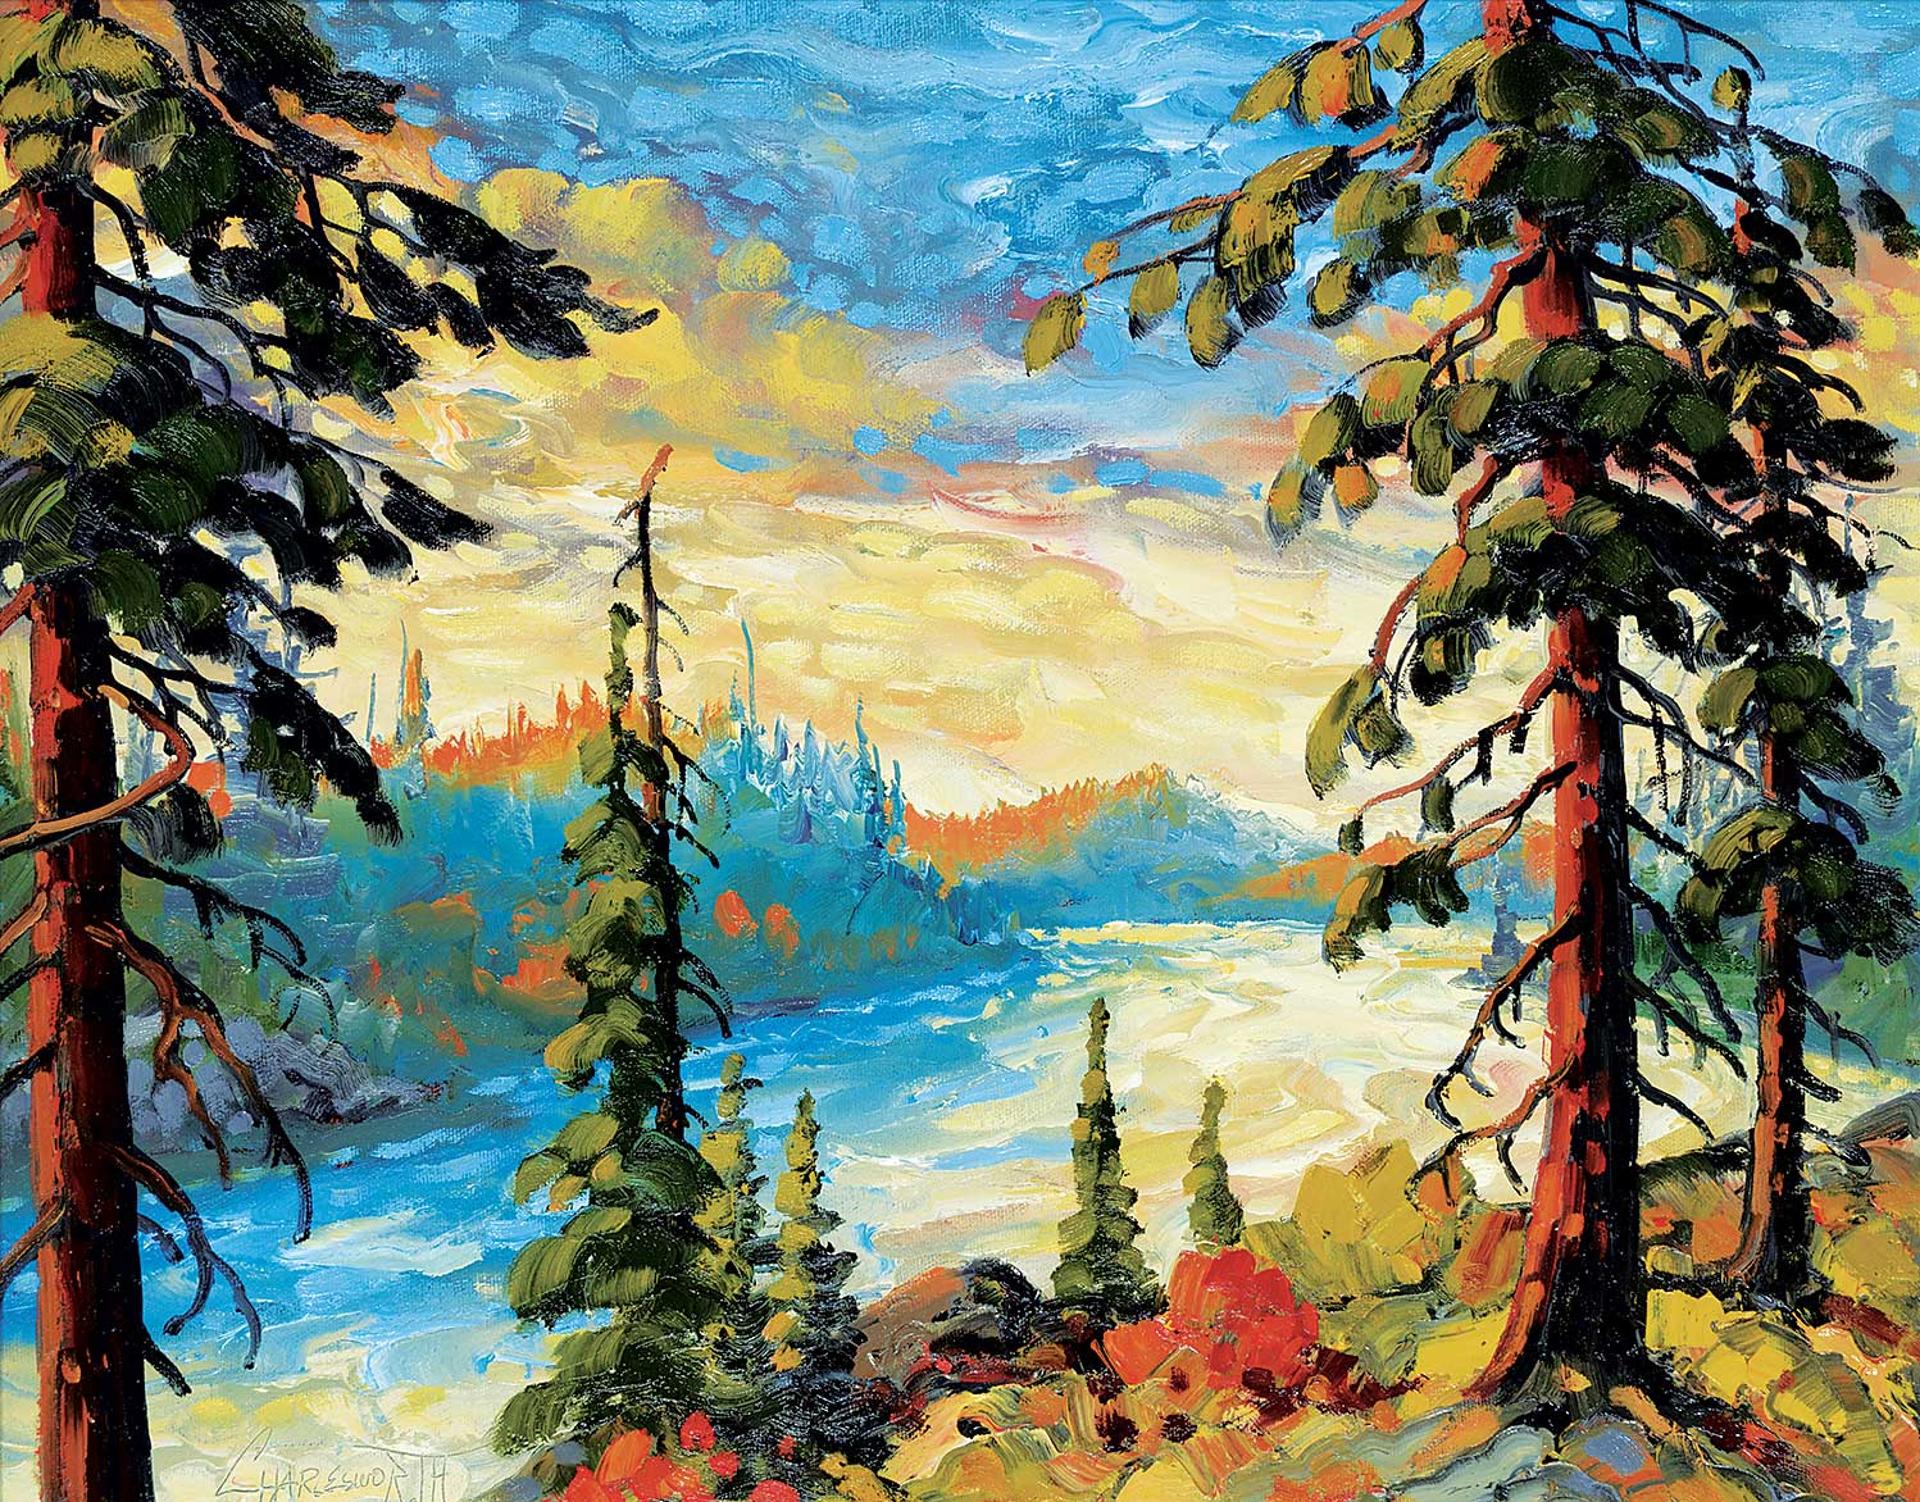 Rod Charlesworth (1955) - Summer Late Light, Yukon River